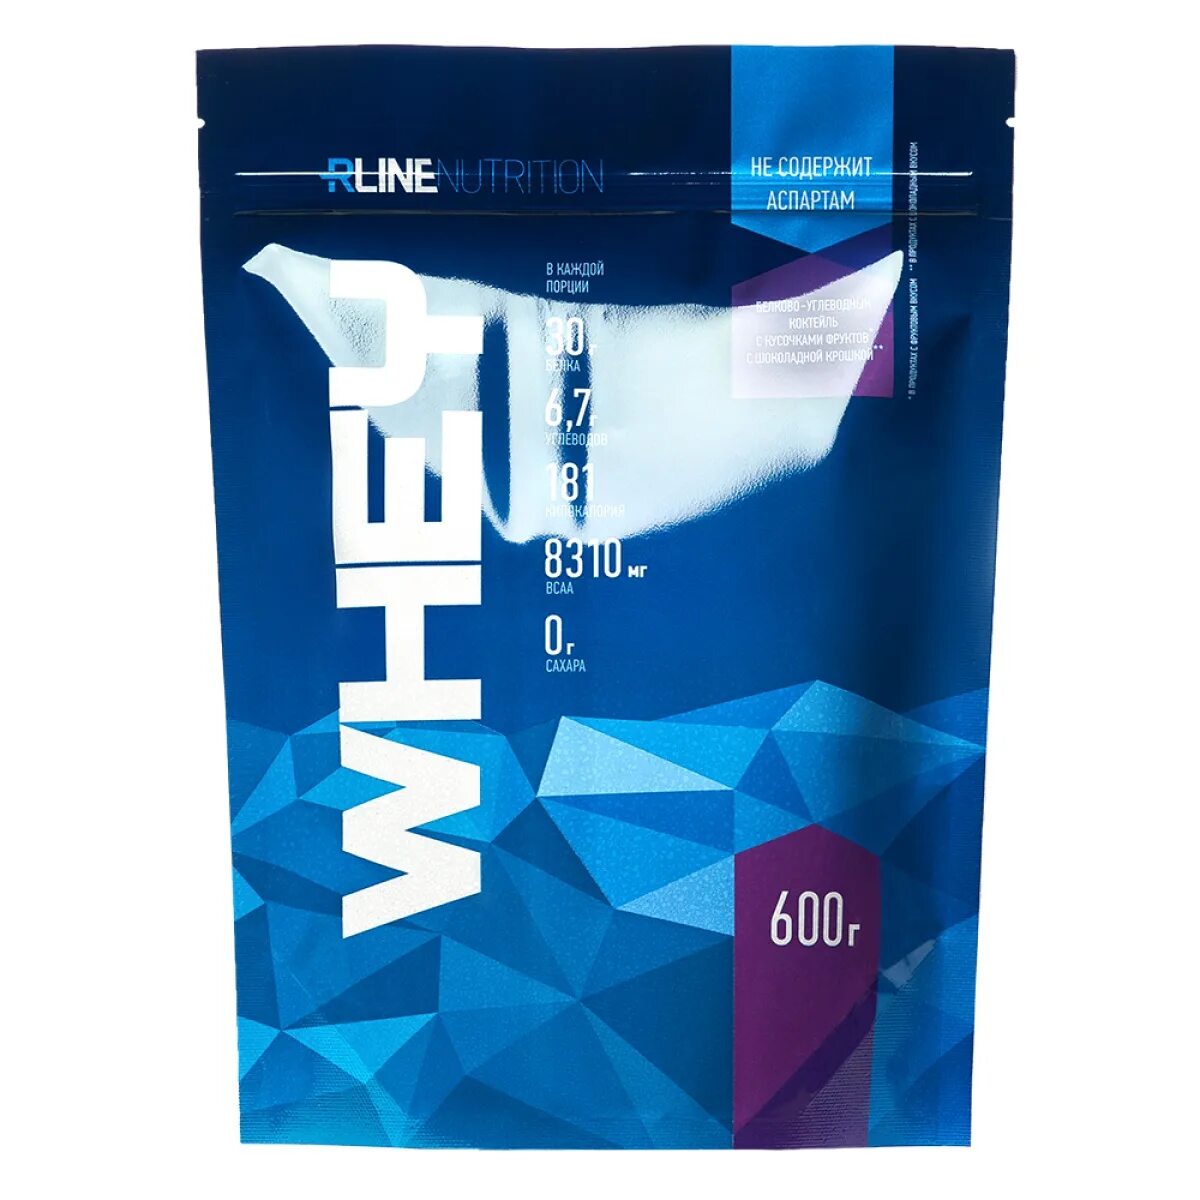 Rline Nutrition протеин. Rline Whey. R-line Whey, 1000 g (пломбир). Протеин сывороточный rline Whey. Протеин rline